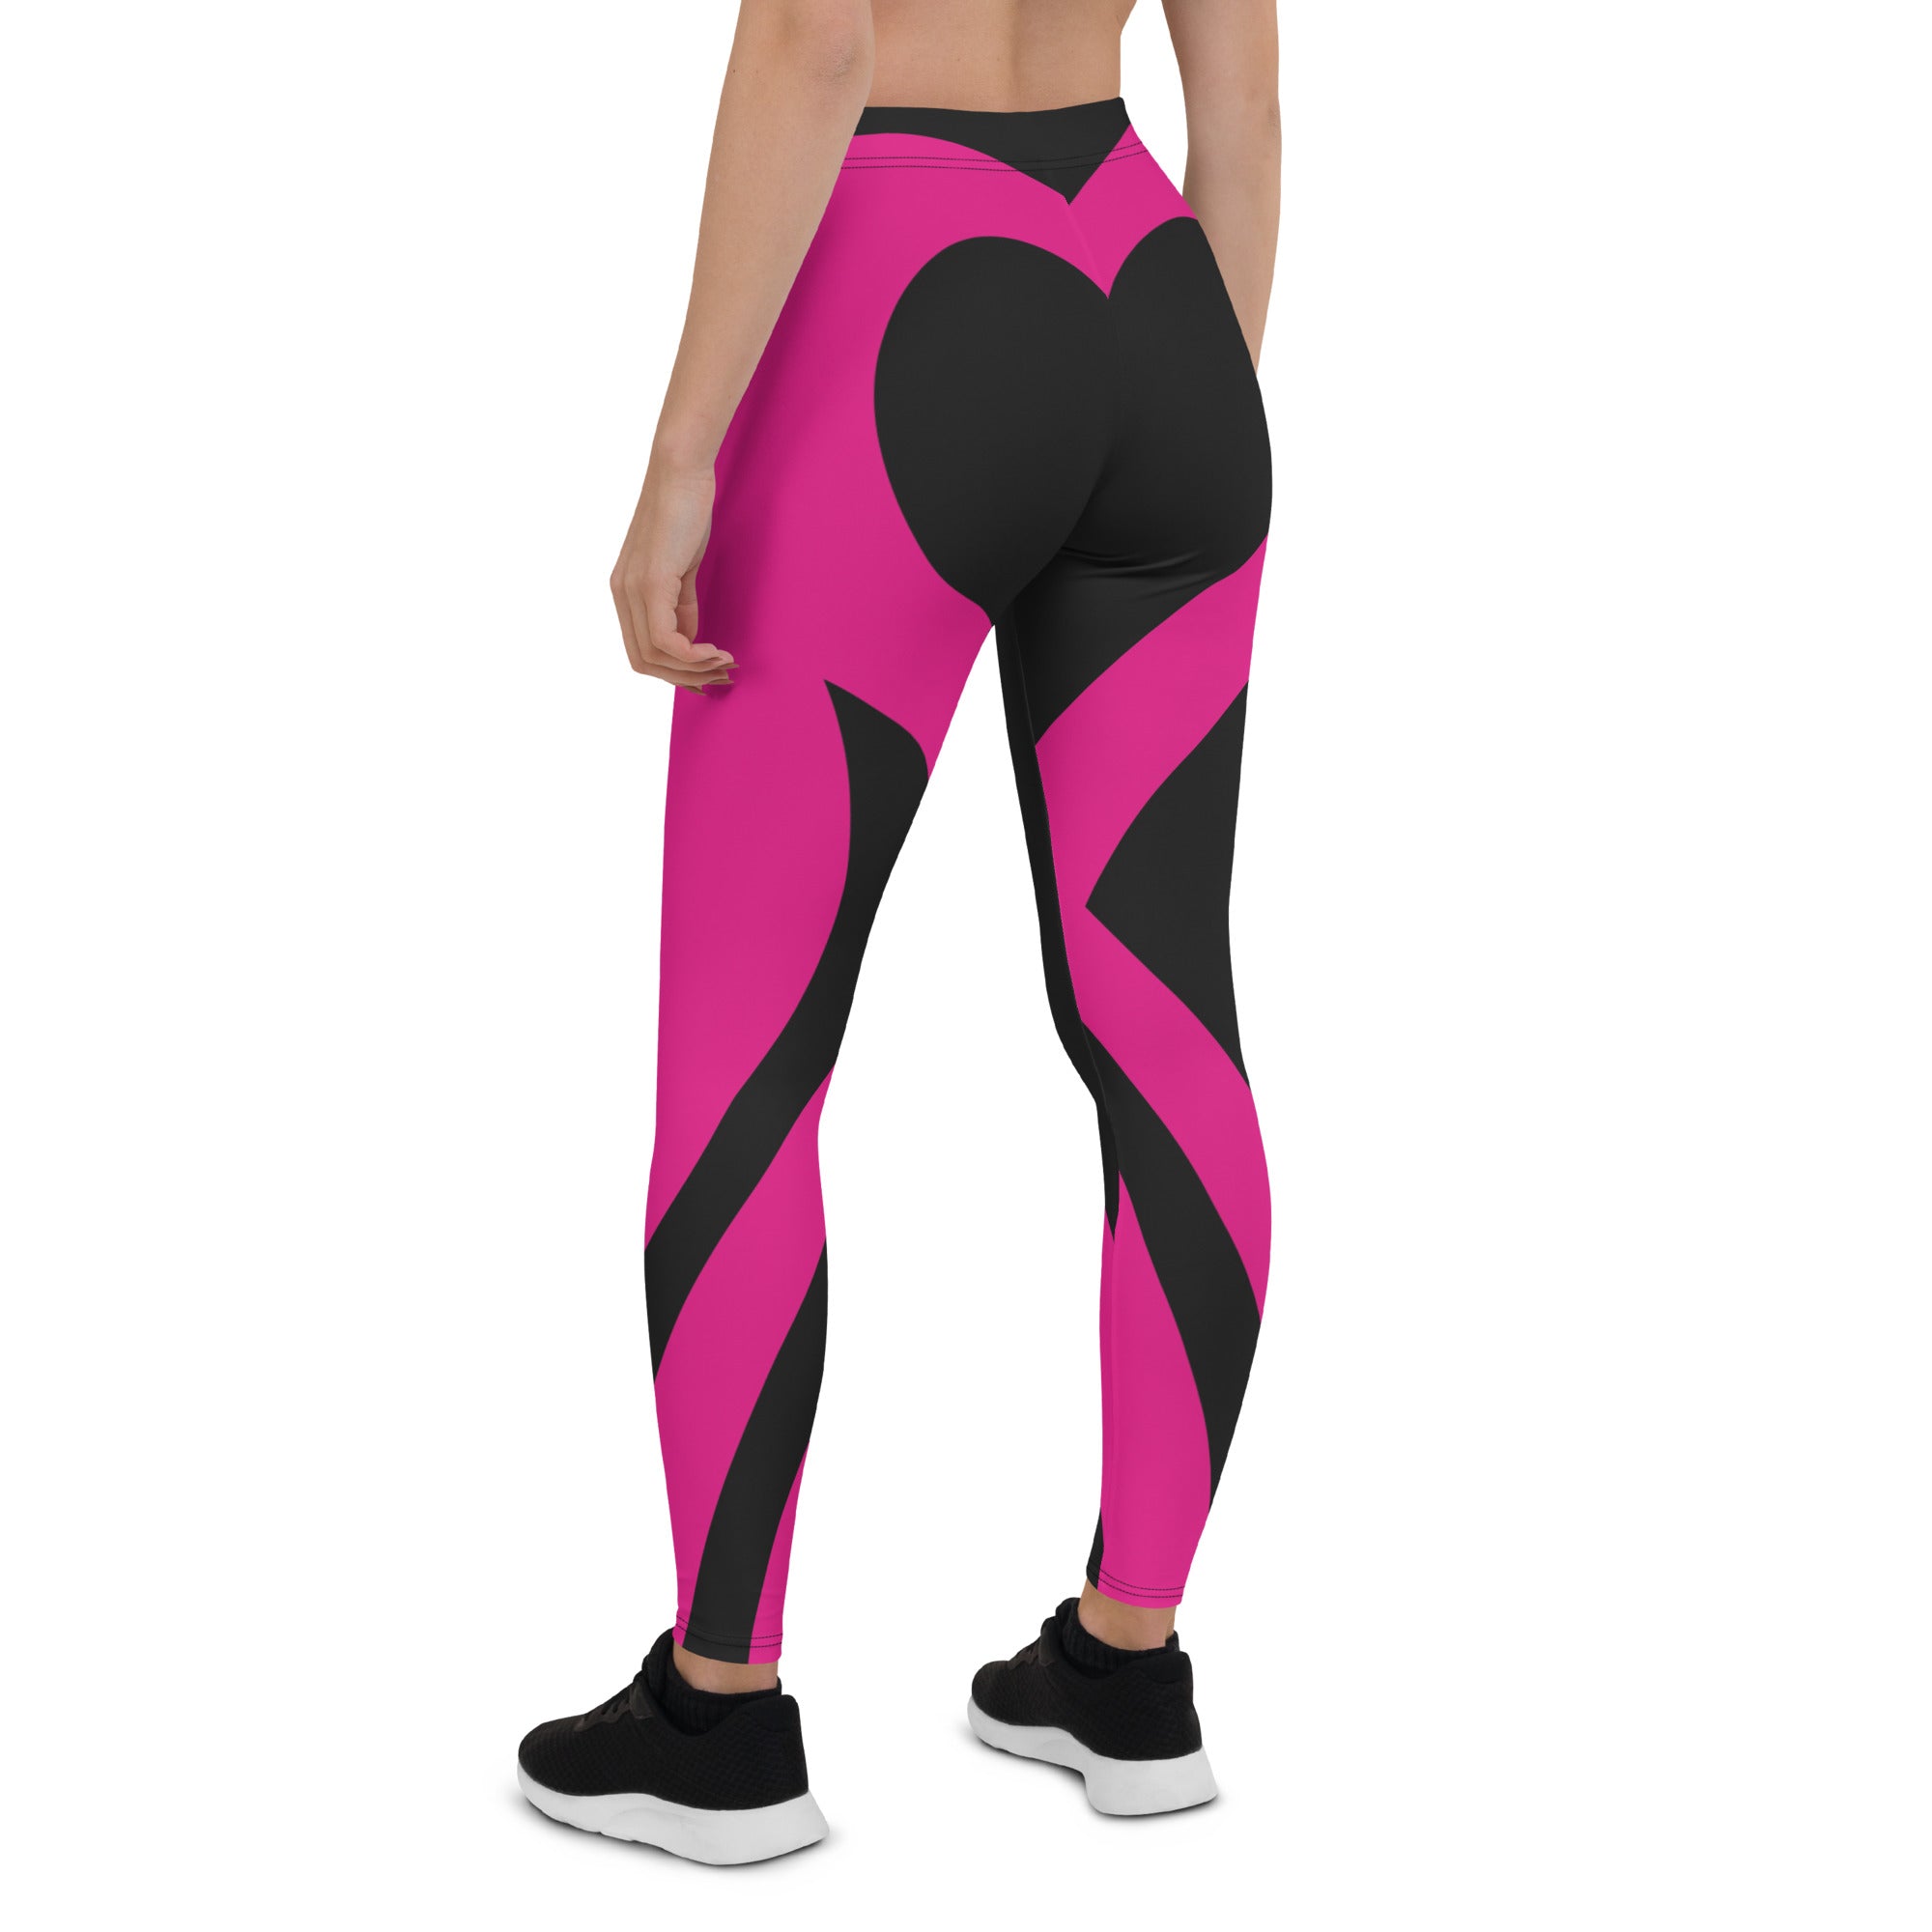 FT010 Jenn Sportswear Yoga Set (M- Black, L- Grey, Pink) - Hearts